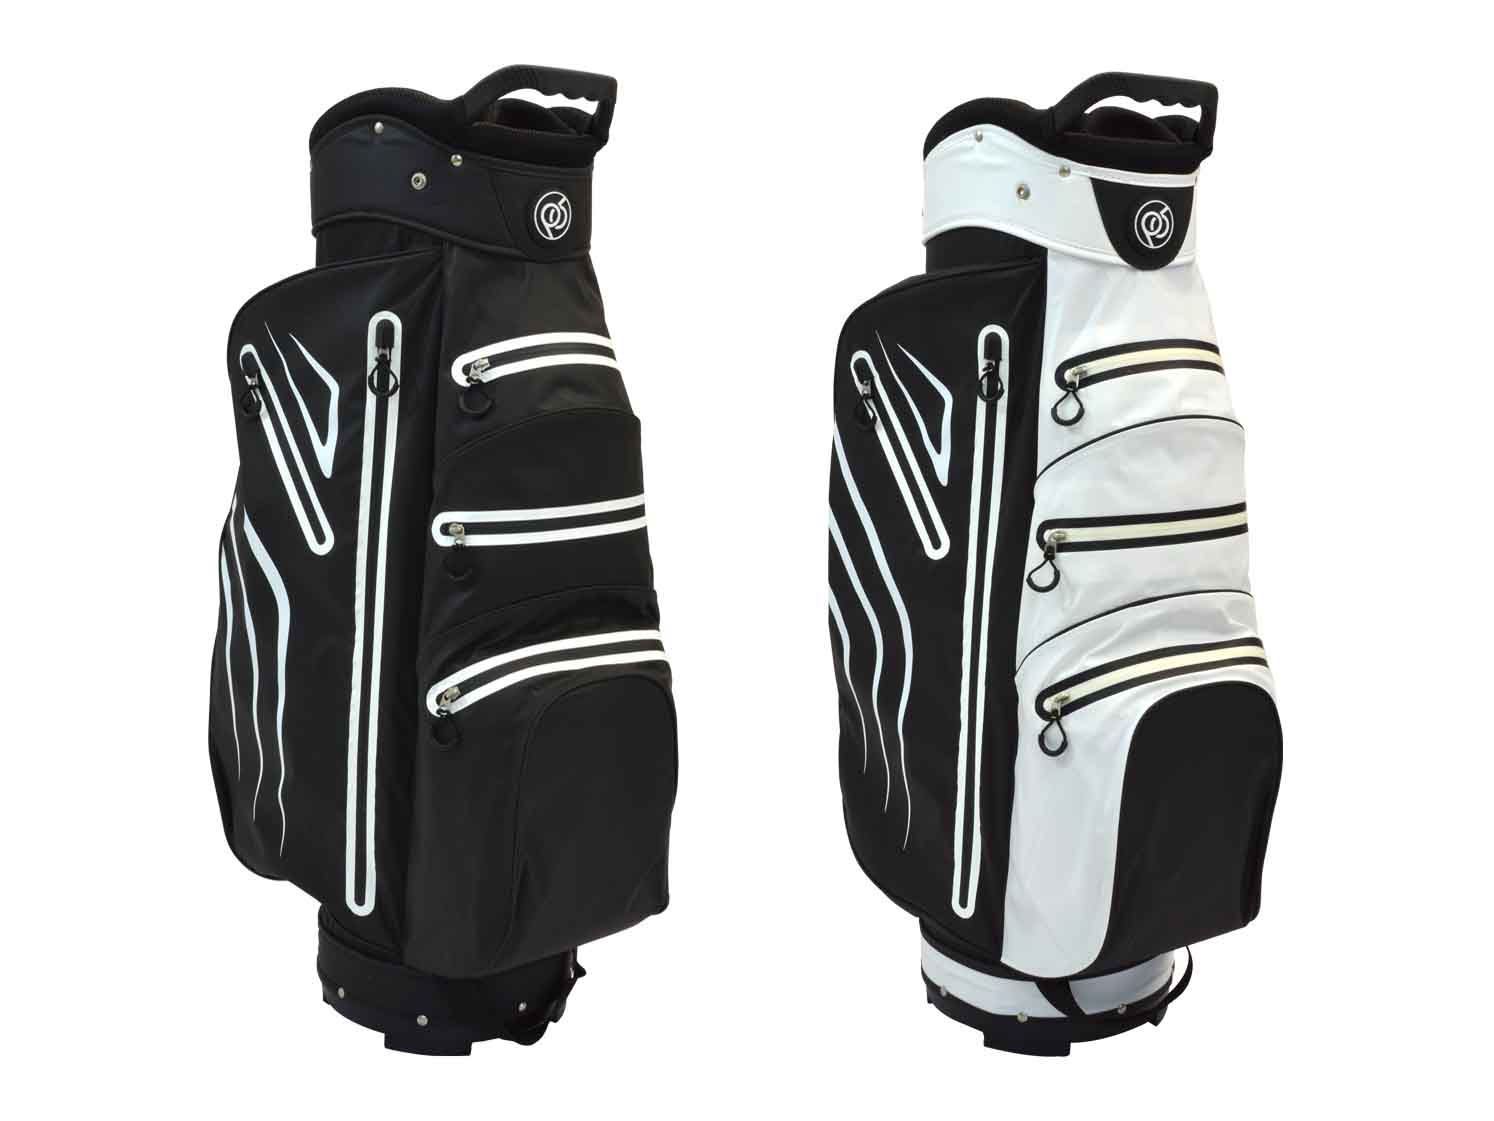 Powerbug cart | unveiled Golf bag Monthly waterproof